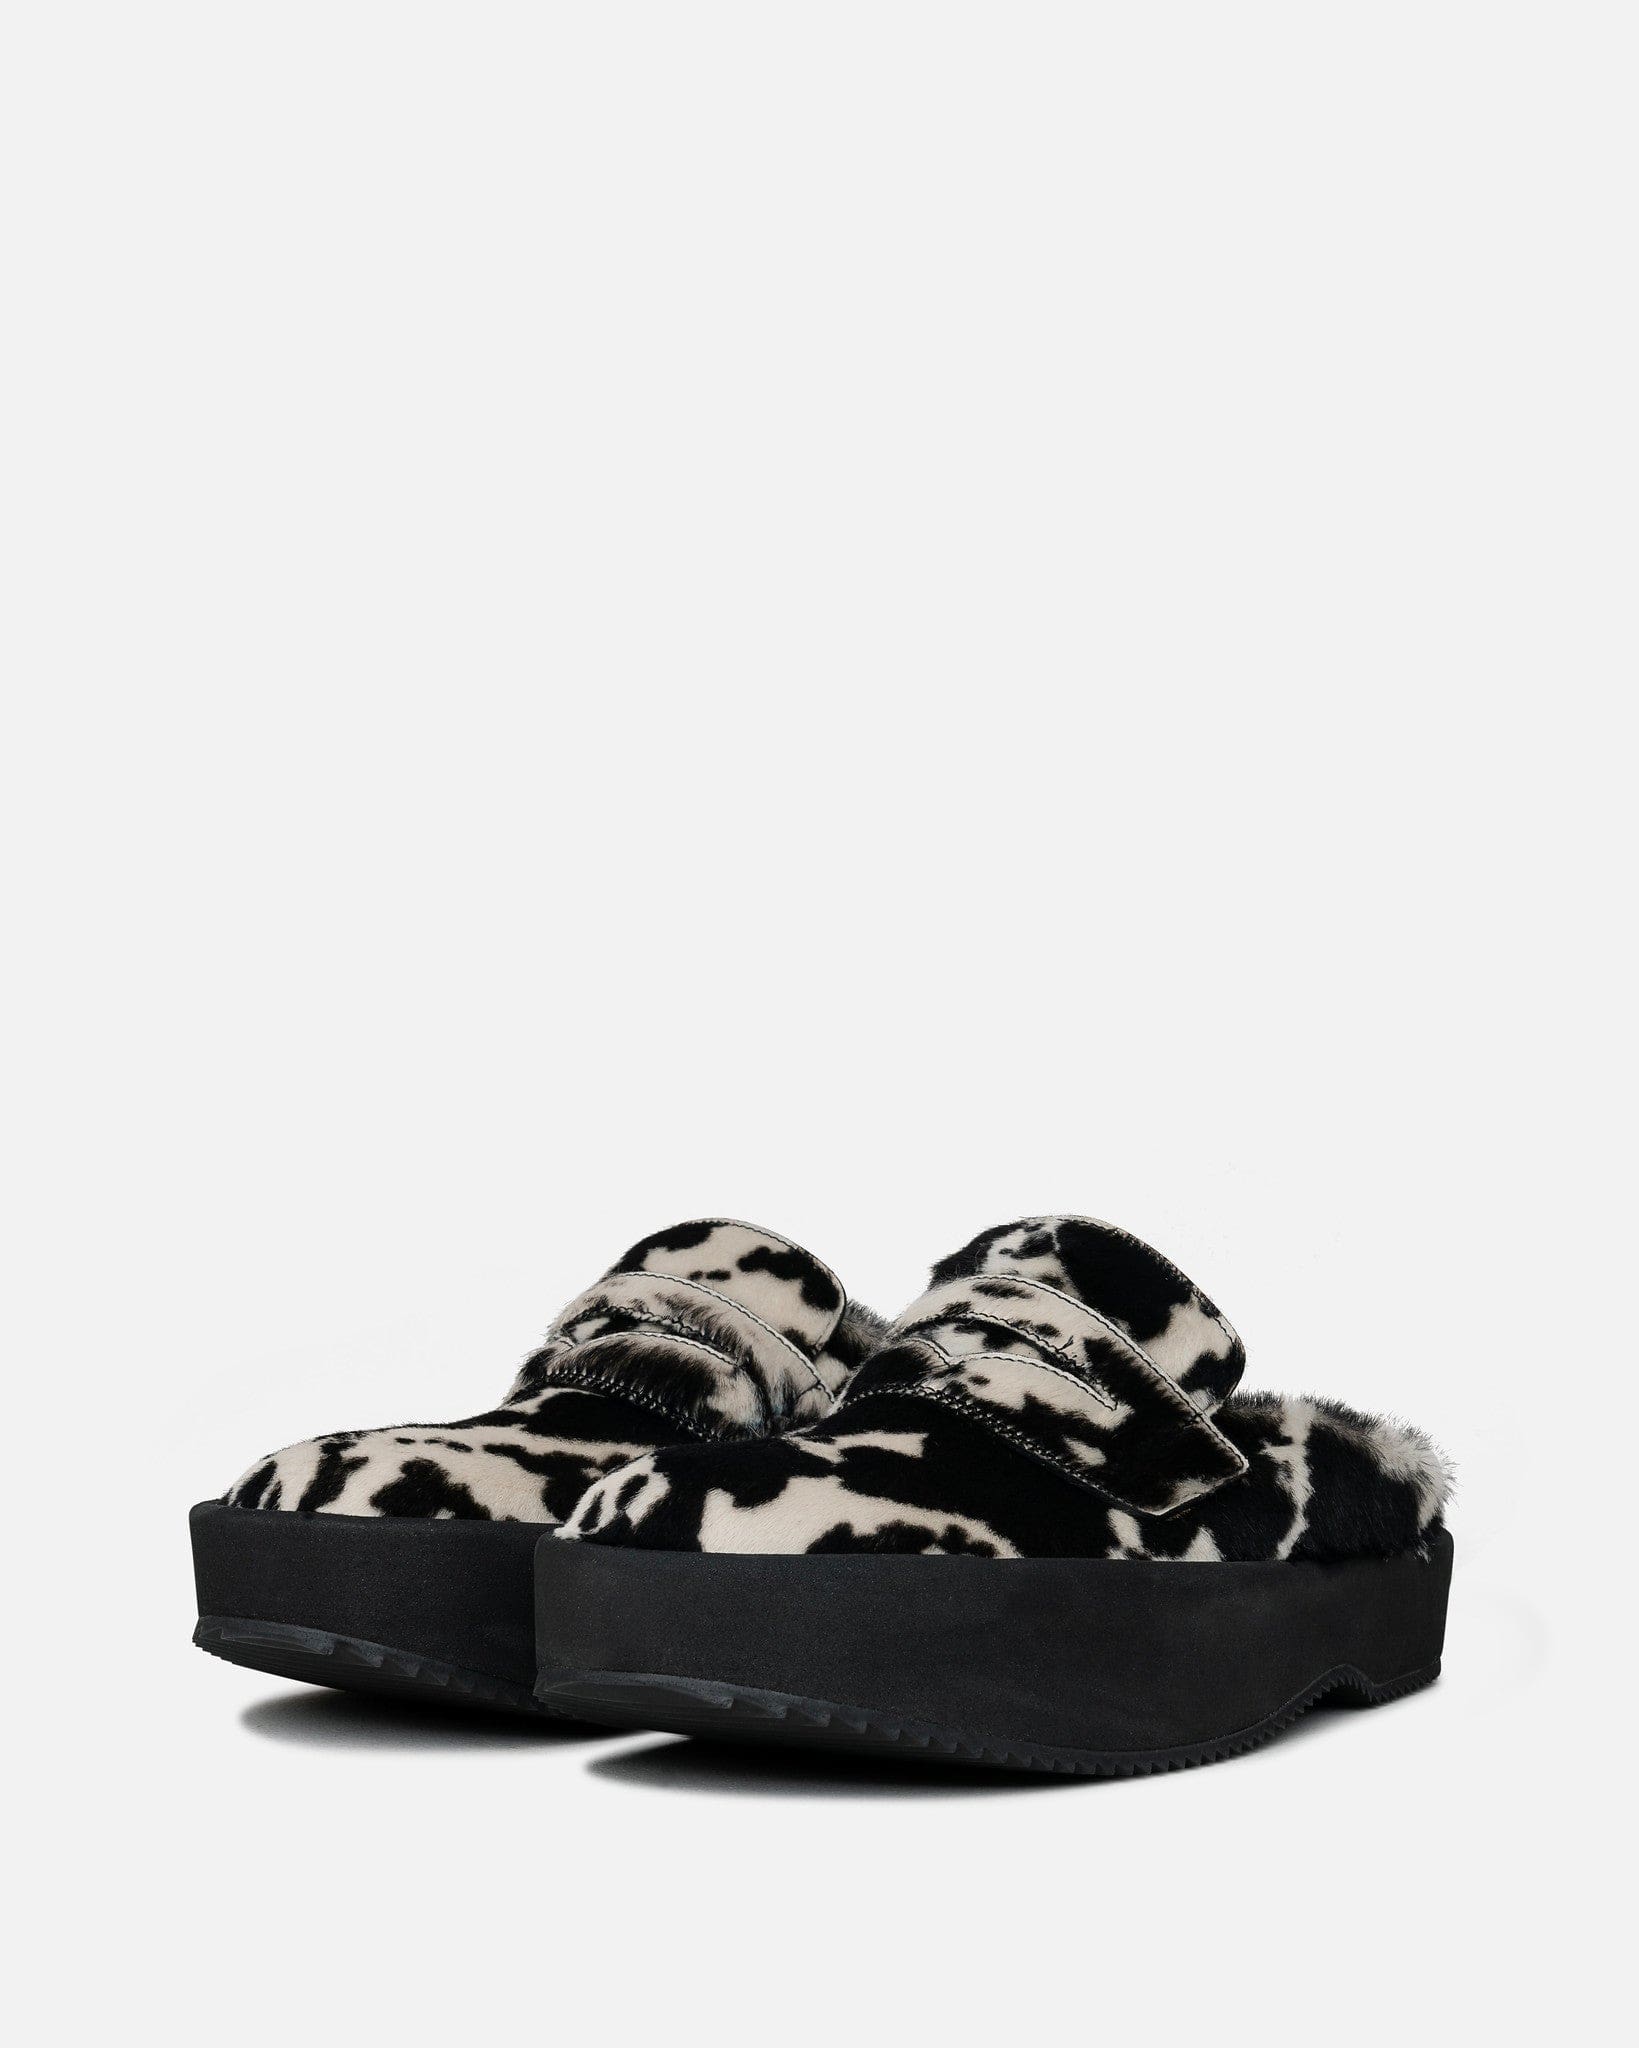 Dries Van Noten Men's Shoes Platform Slip on Loafers in Black/White